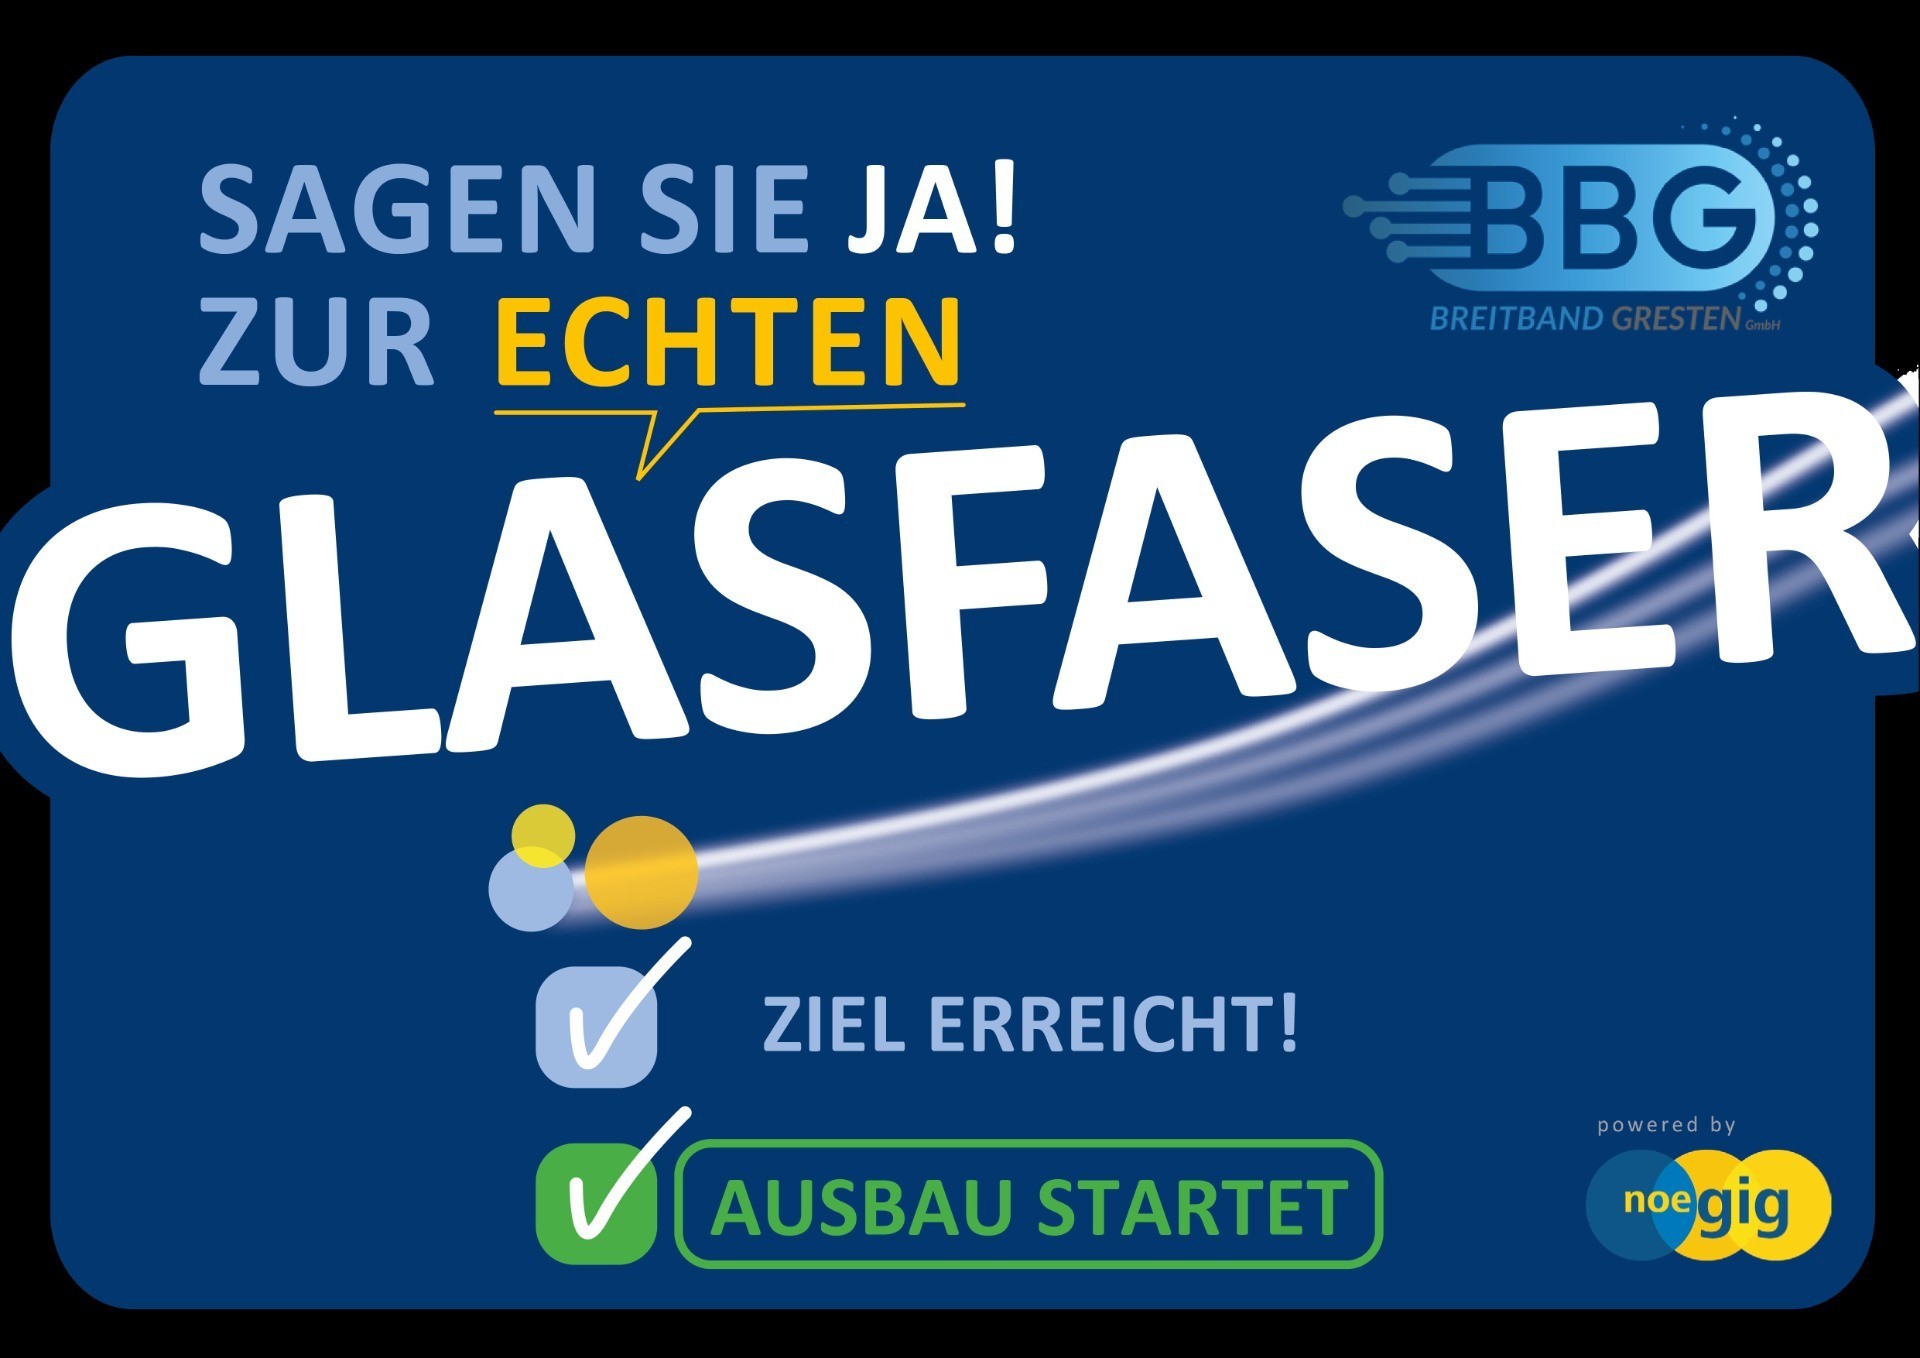 BBG_Ziel erreicht_Ausbau_202310_logo blau.jpeg